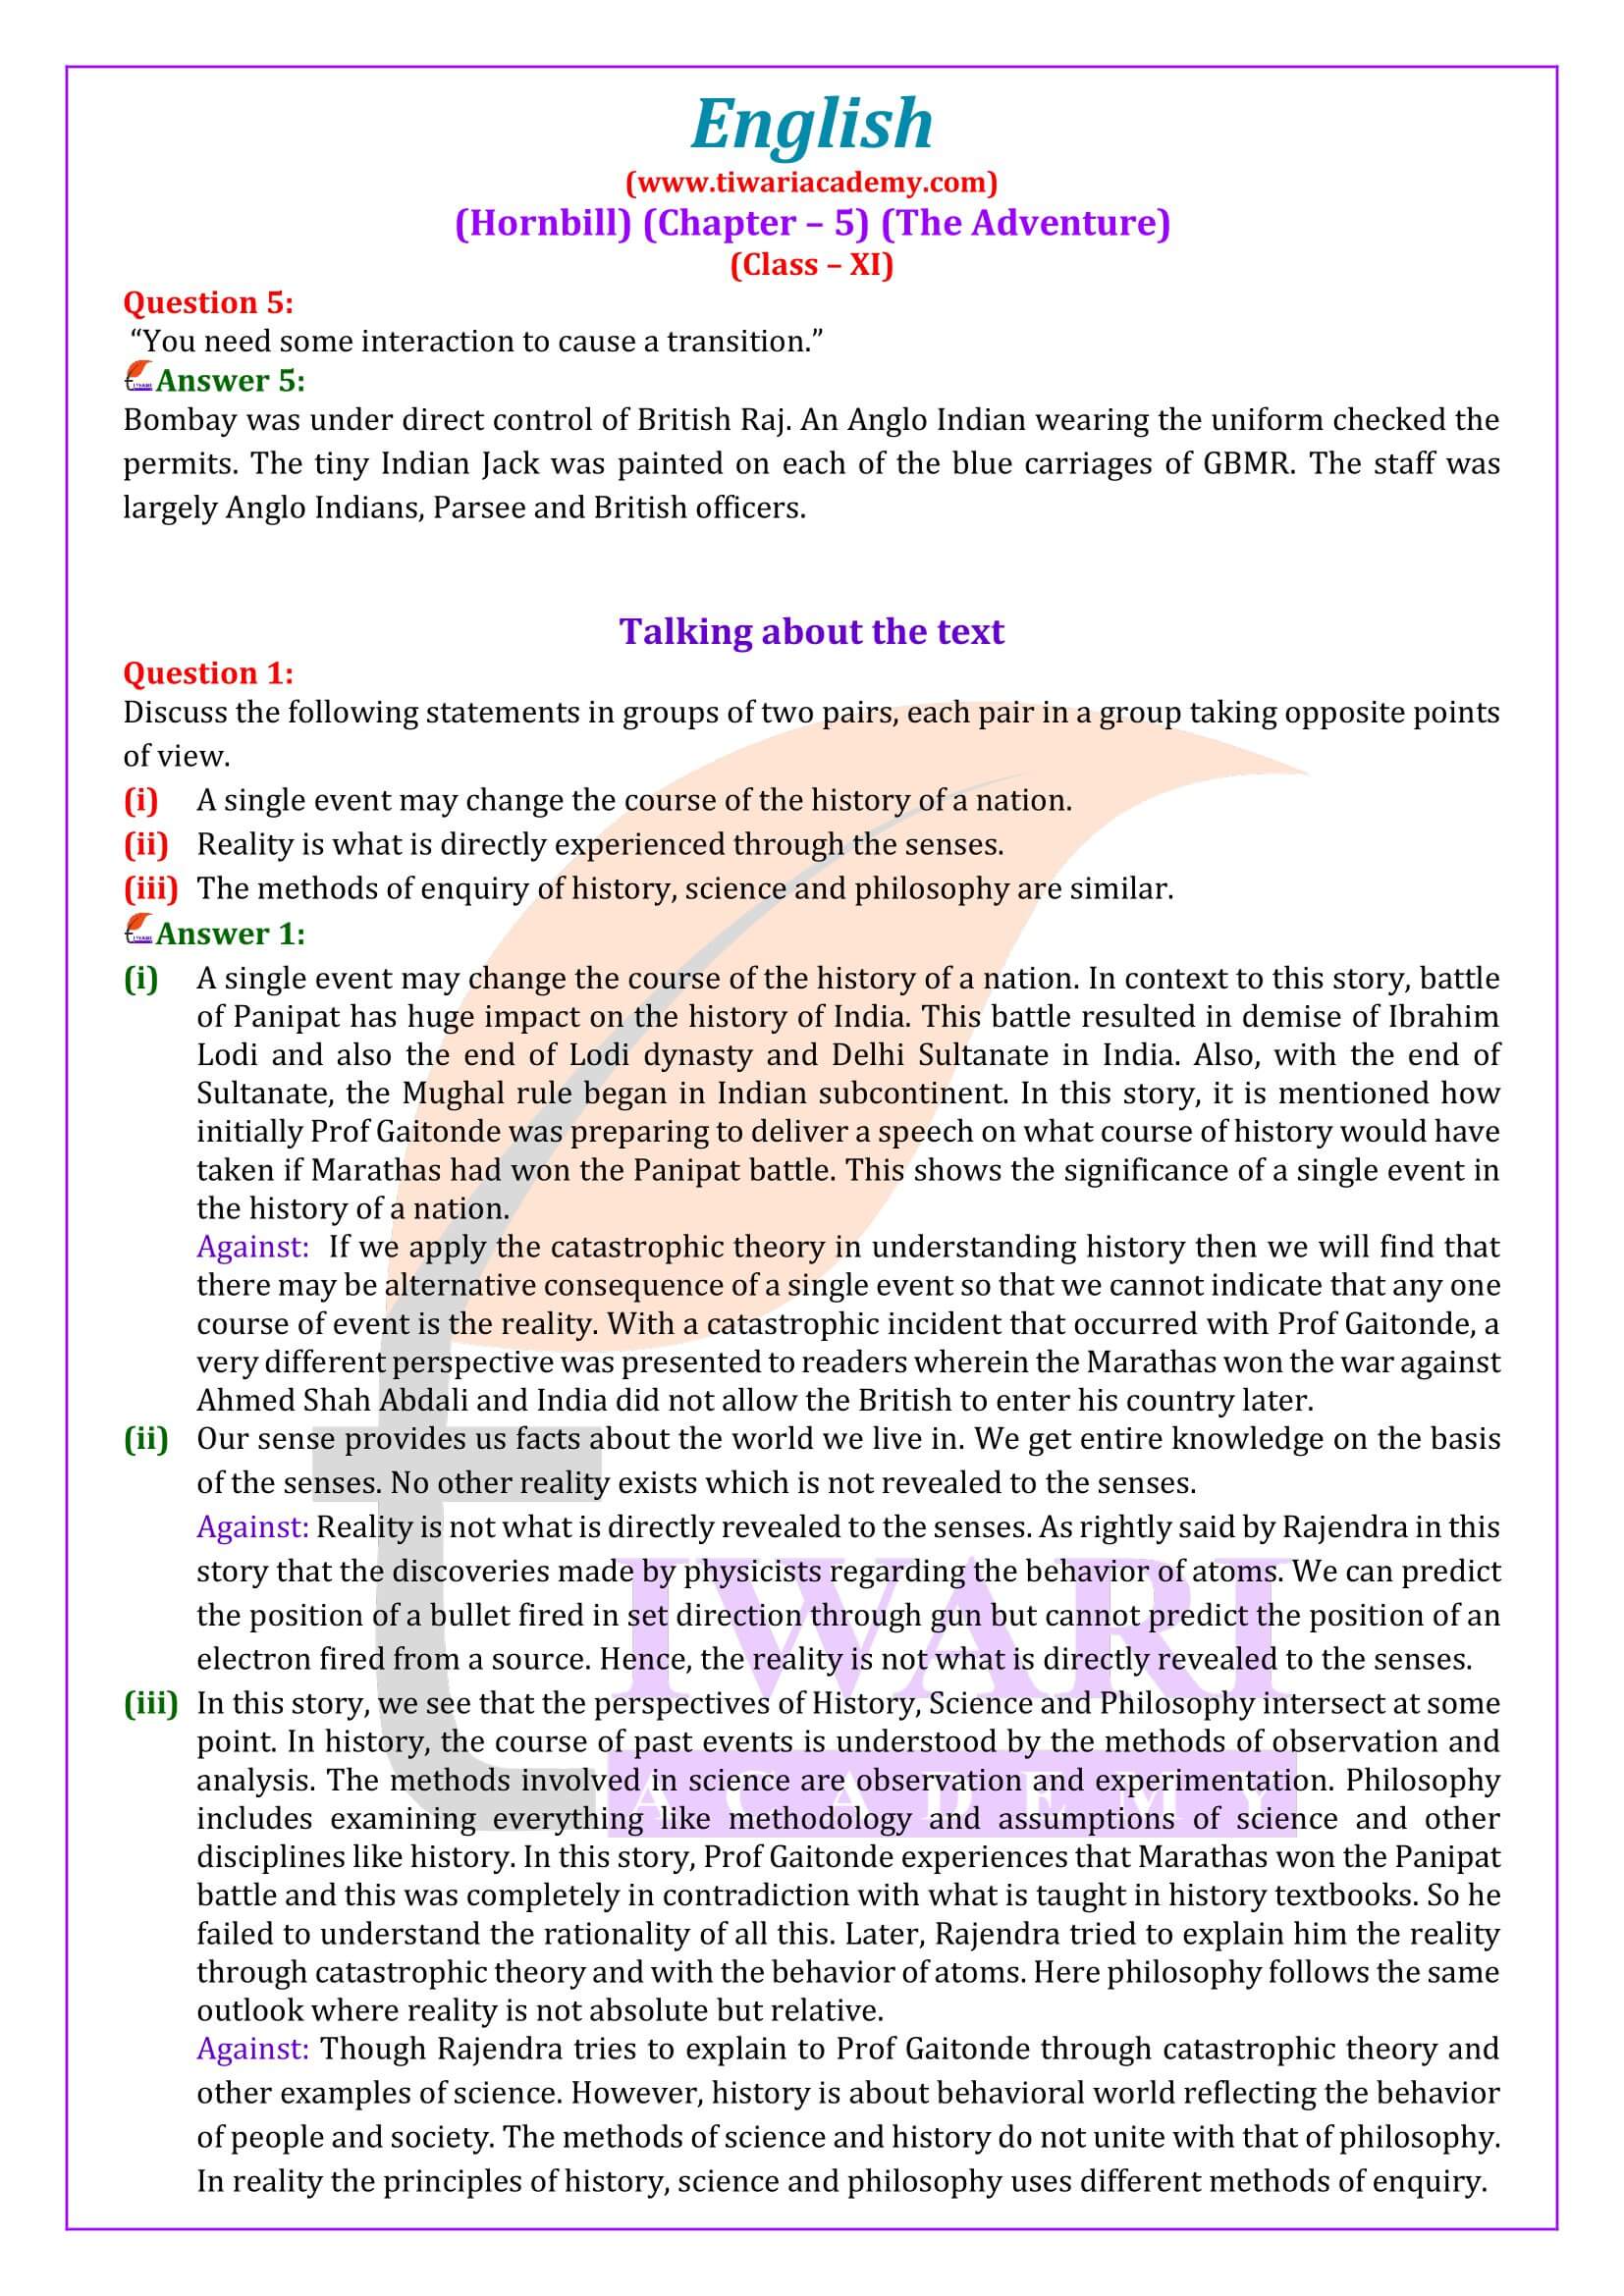 NCERT Solutions for Class 11 English Hornbill Chapter 5